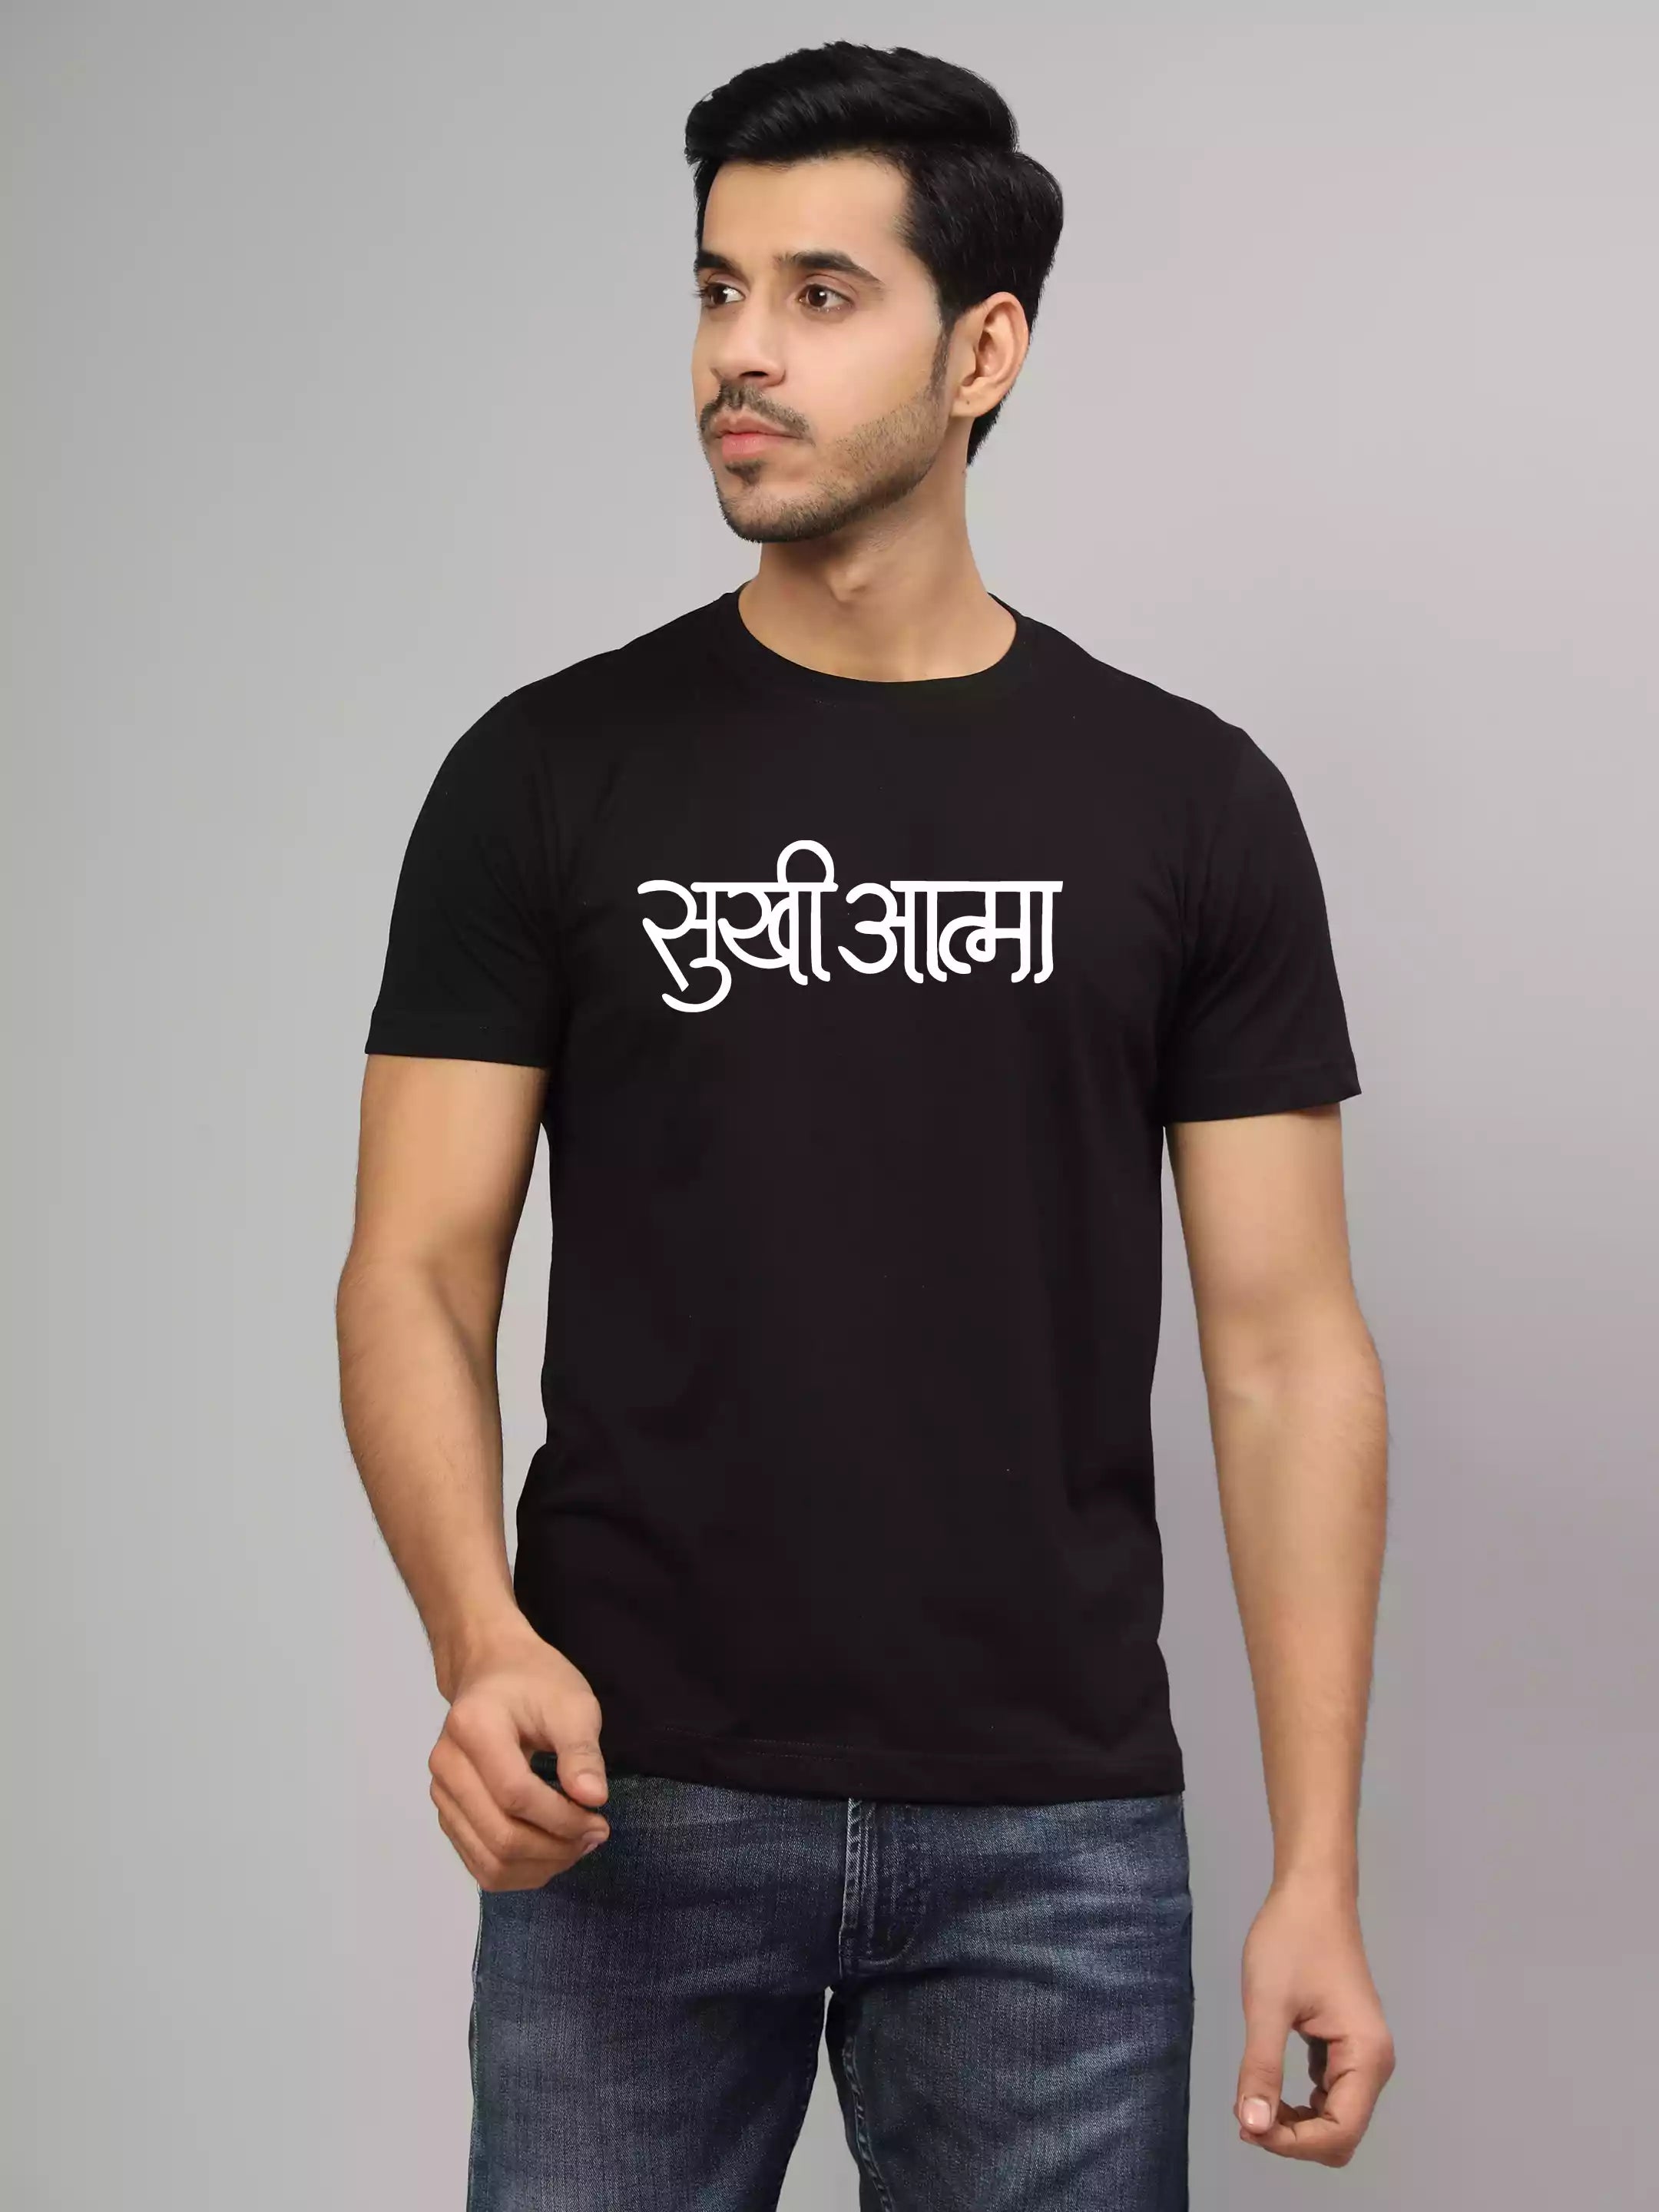 Sukhiaatma - Sukhiaatma Unisex Graphic Printed Black T-shirt